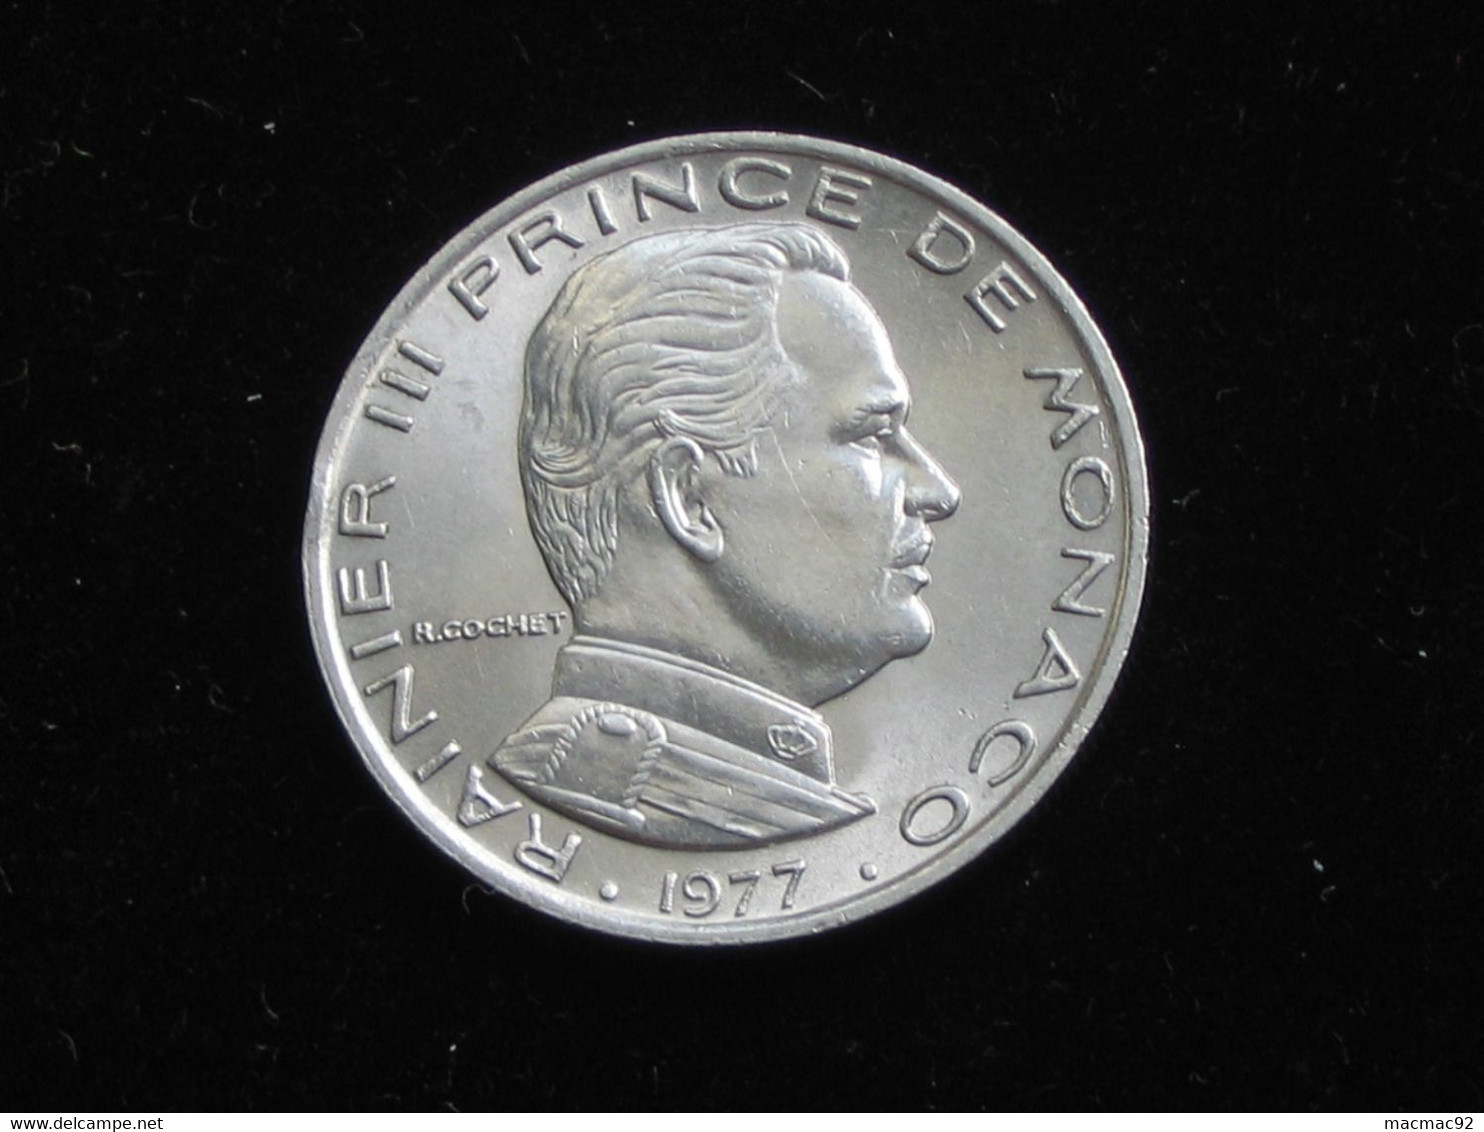 MONACO - 1 Franc 1977 - Rainier III Prince De Monaco **** EN ACHAT IMMEDIAT **** - 1949-1956 Anciens Francs